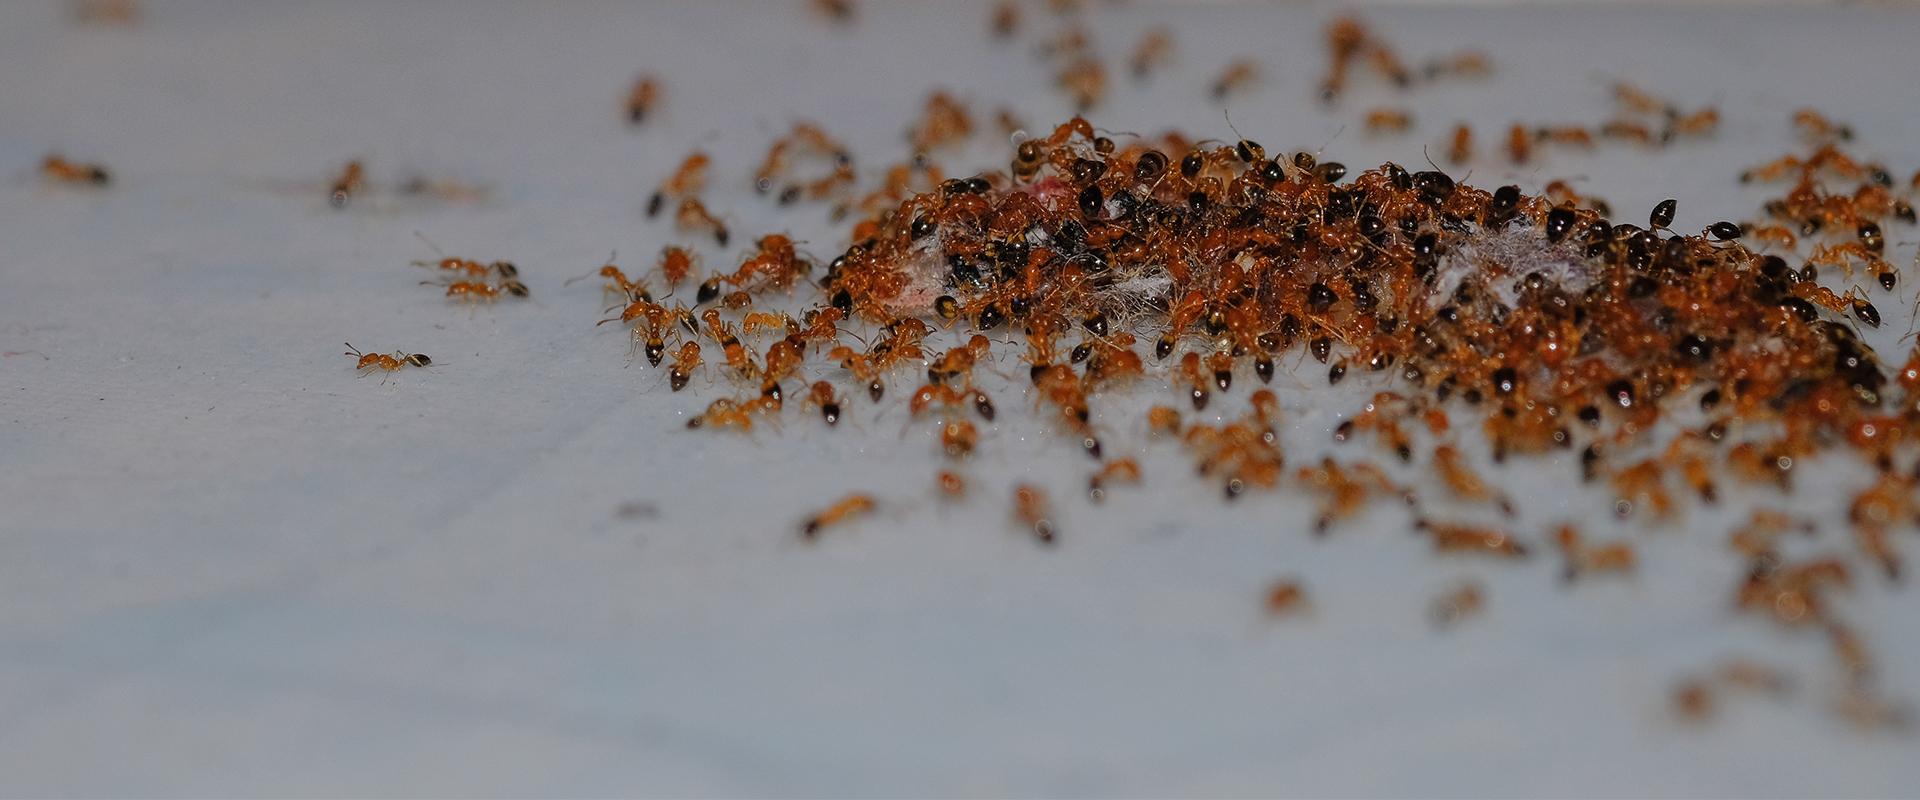 argentine ants on gravel